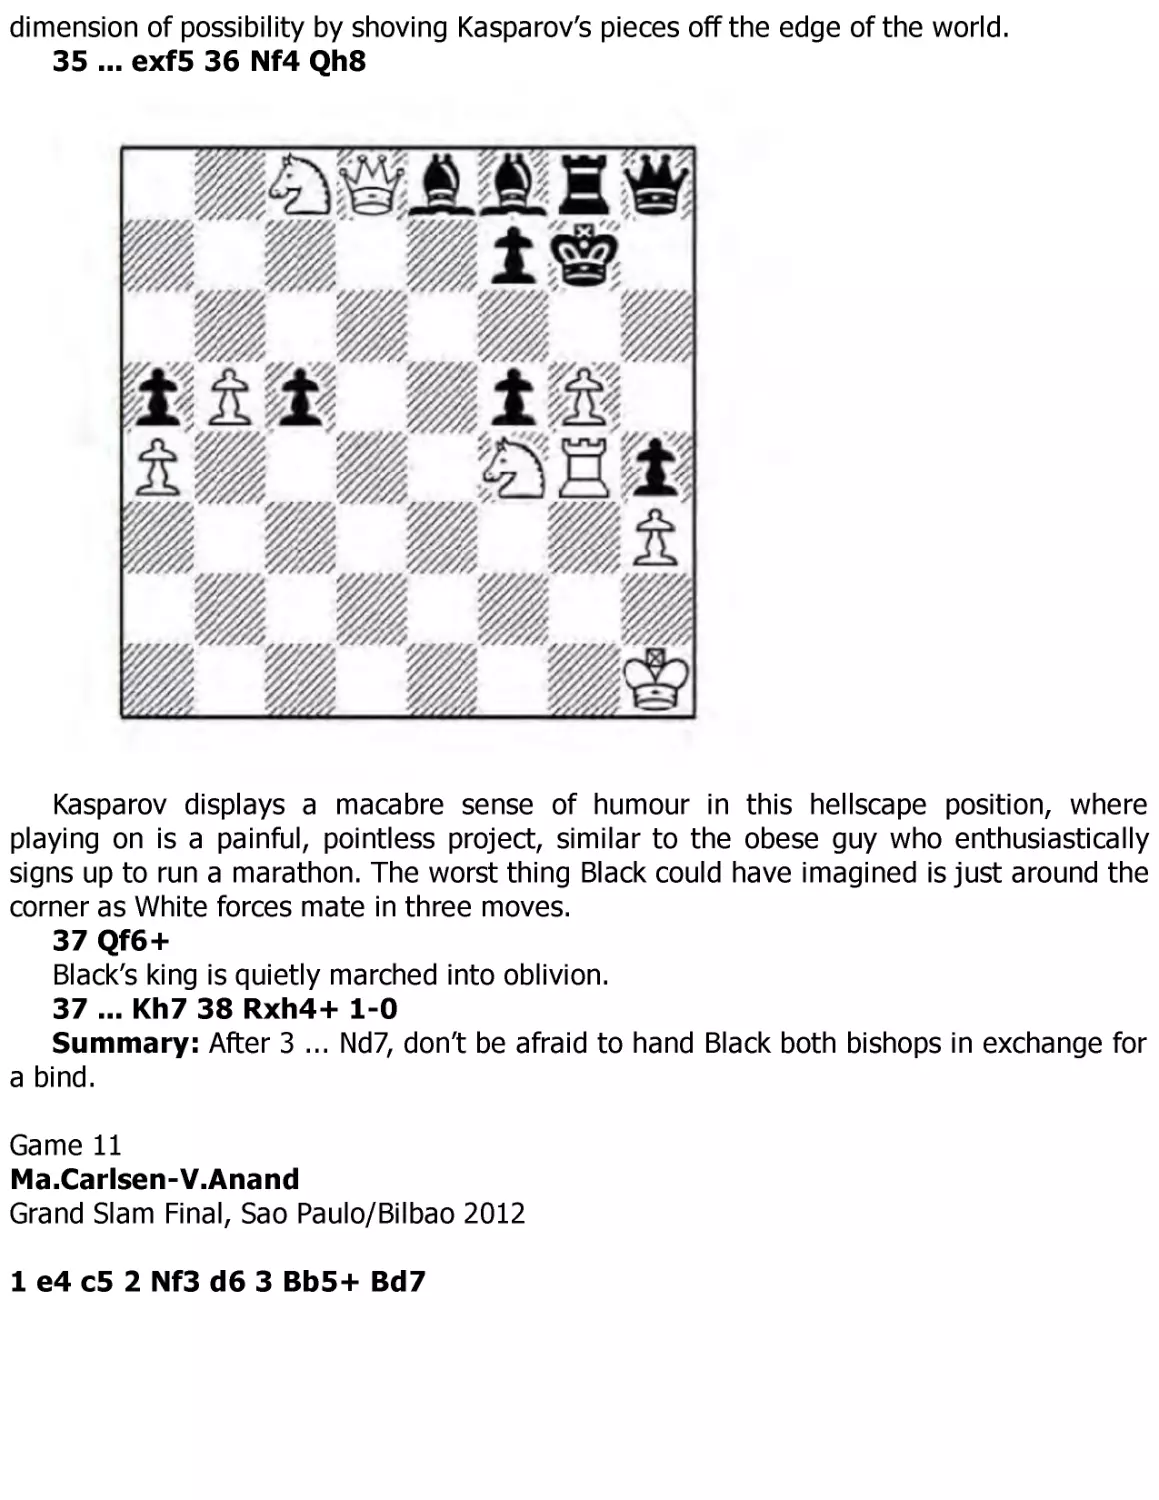 ﻿Carlsen.Ma-Anand.V, Grand Slam Final, Sao Paulo/Bilbao 201